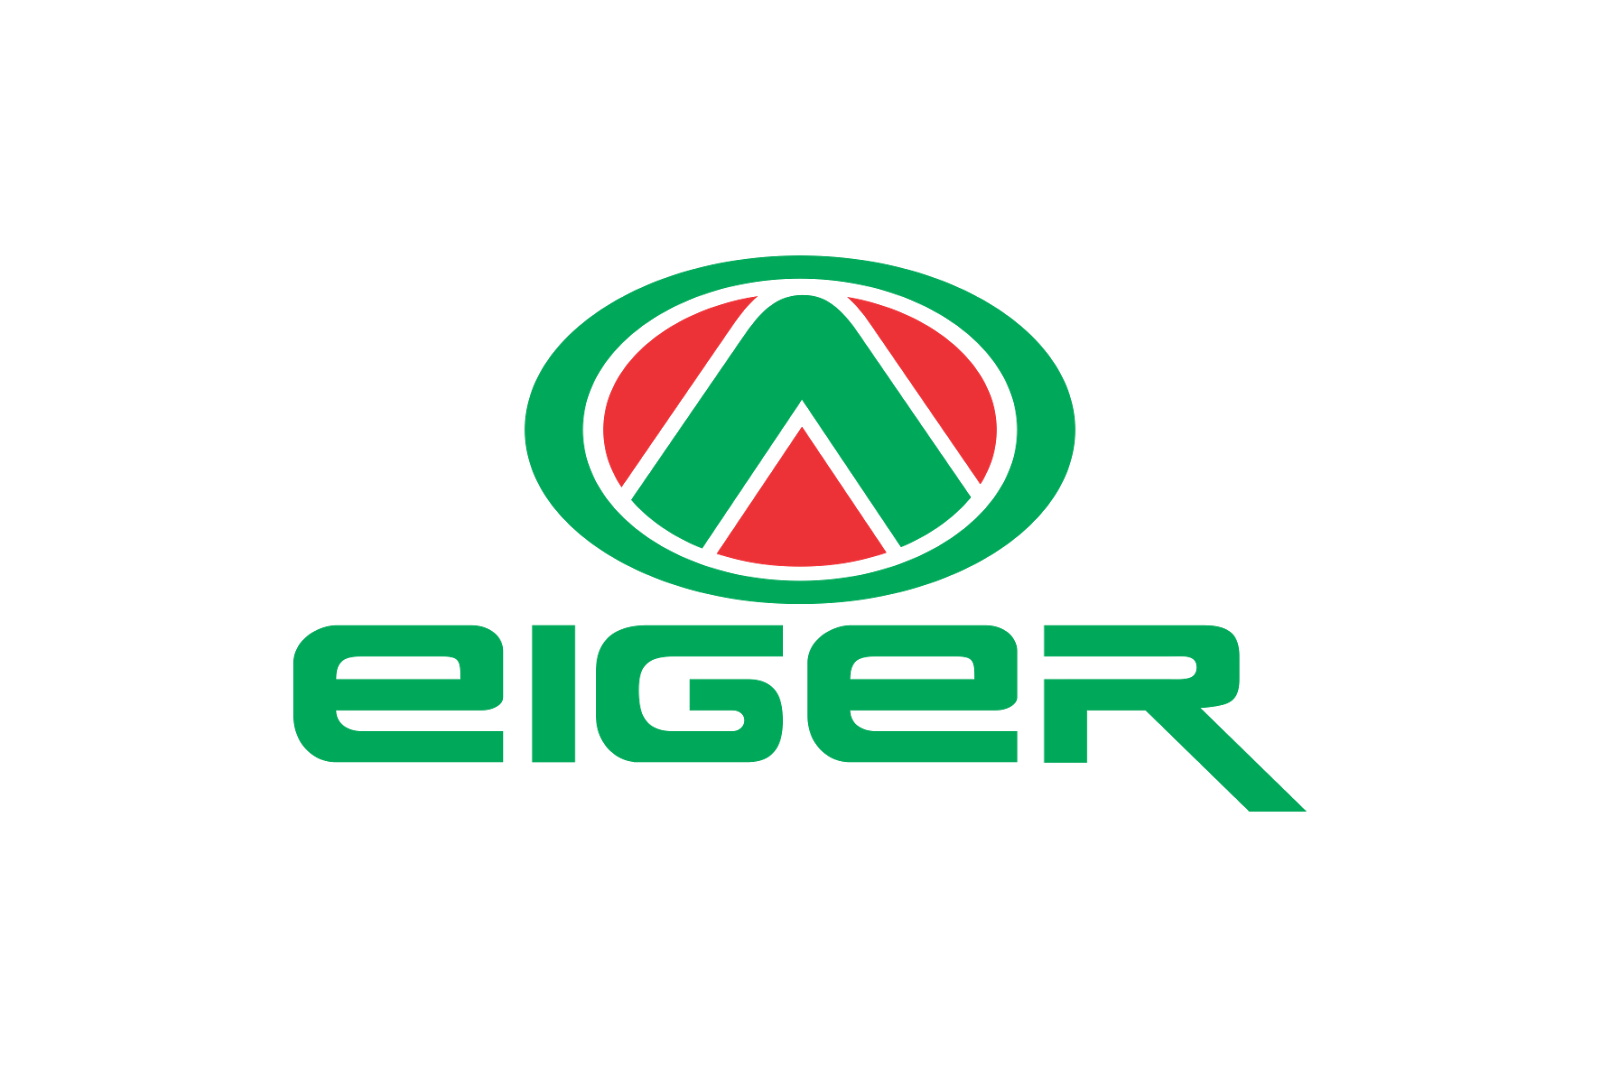  Eiger  Logo 